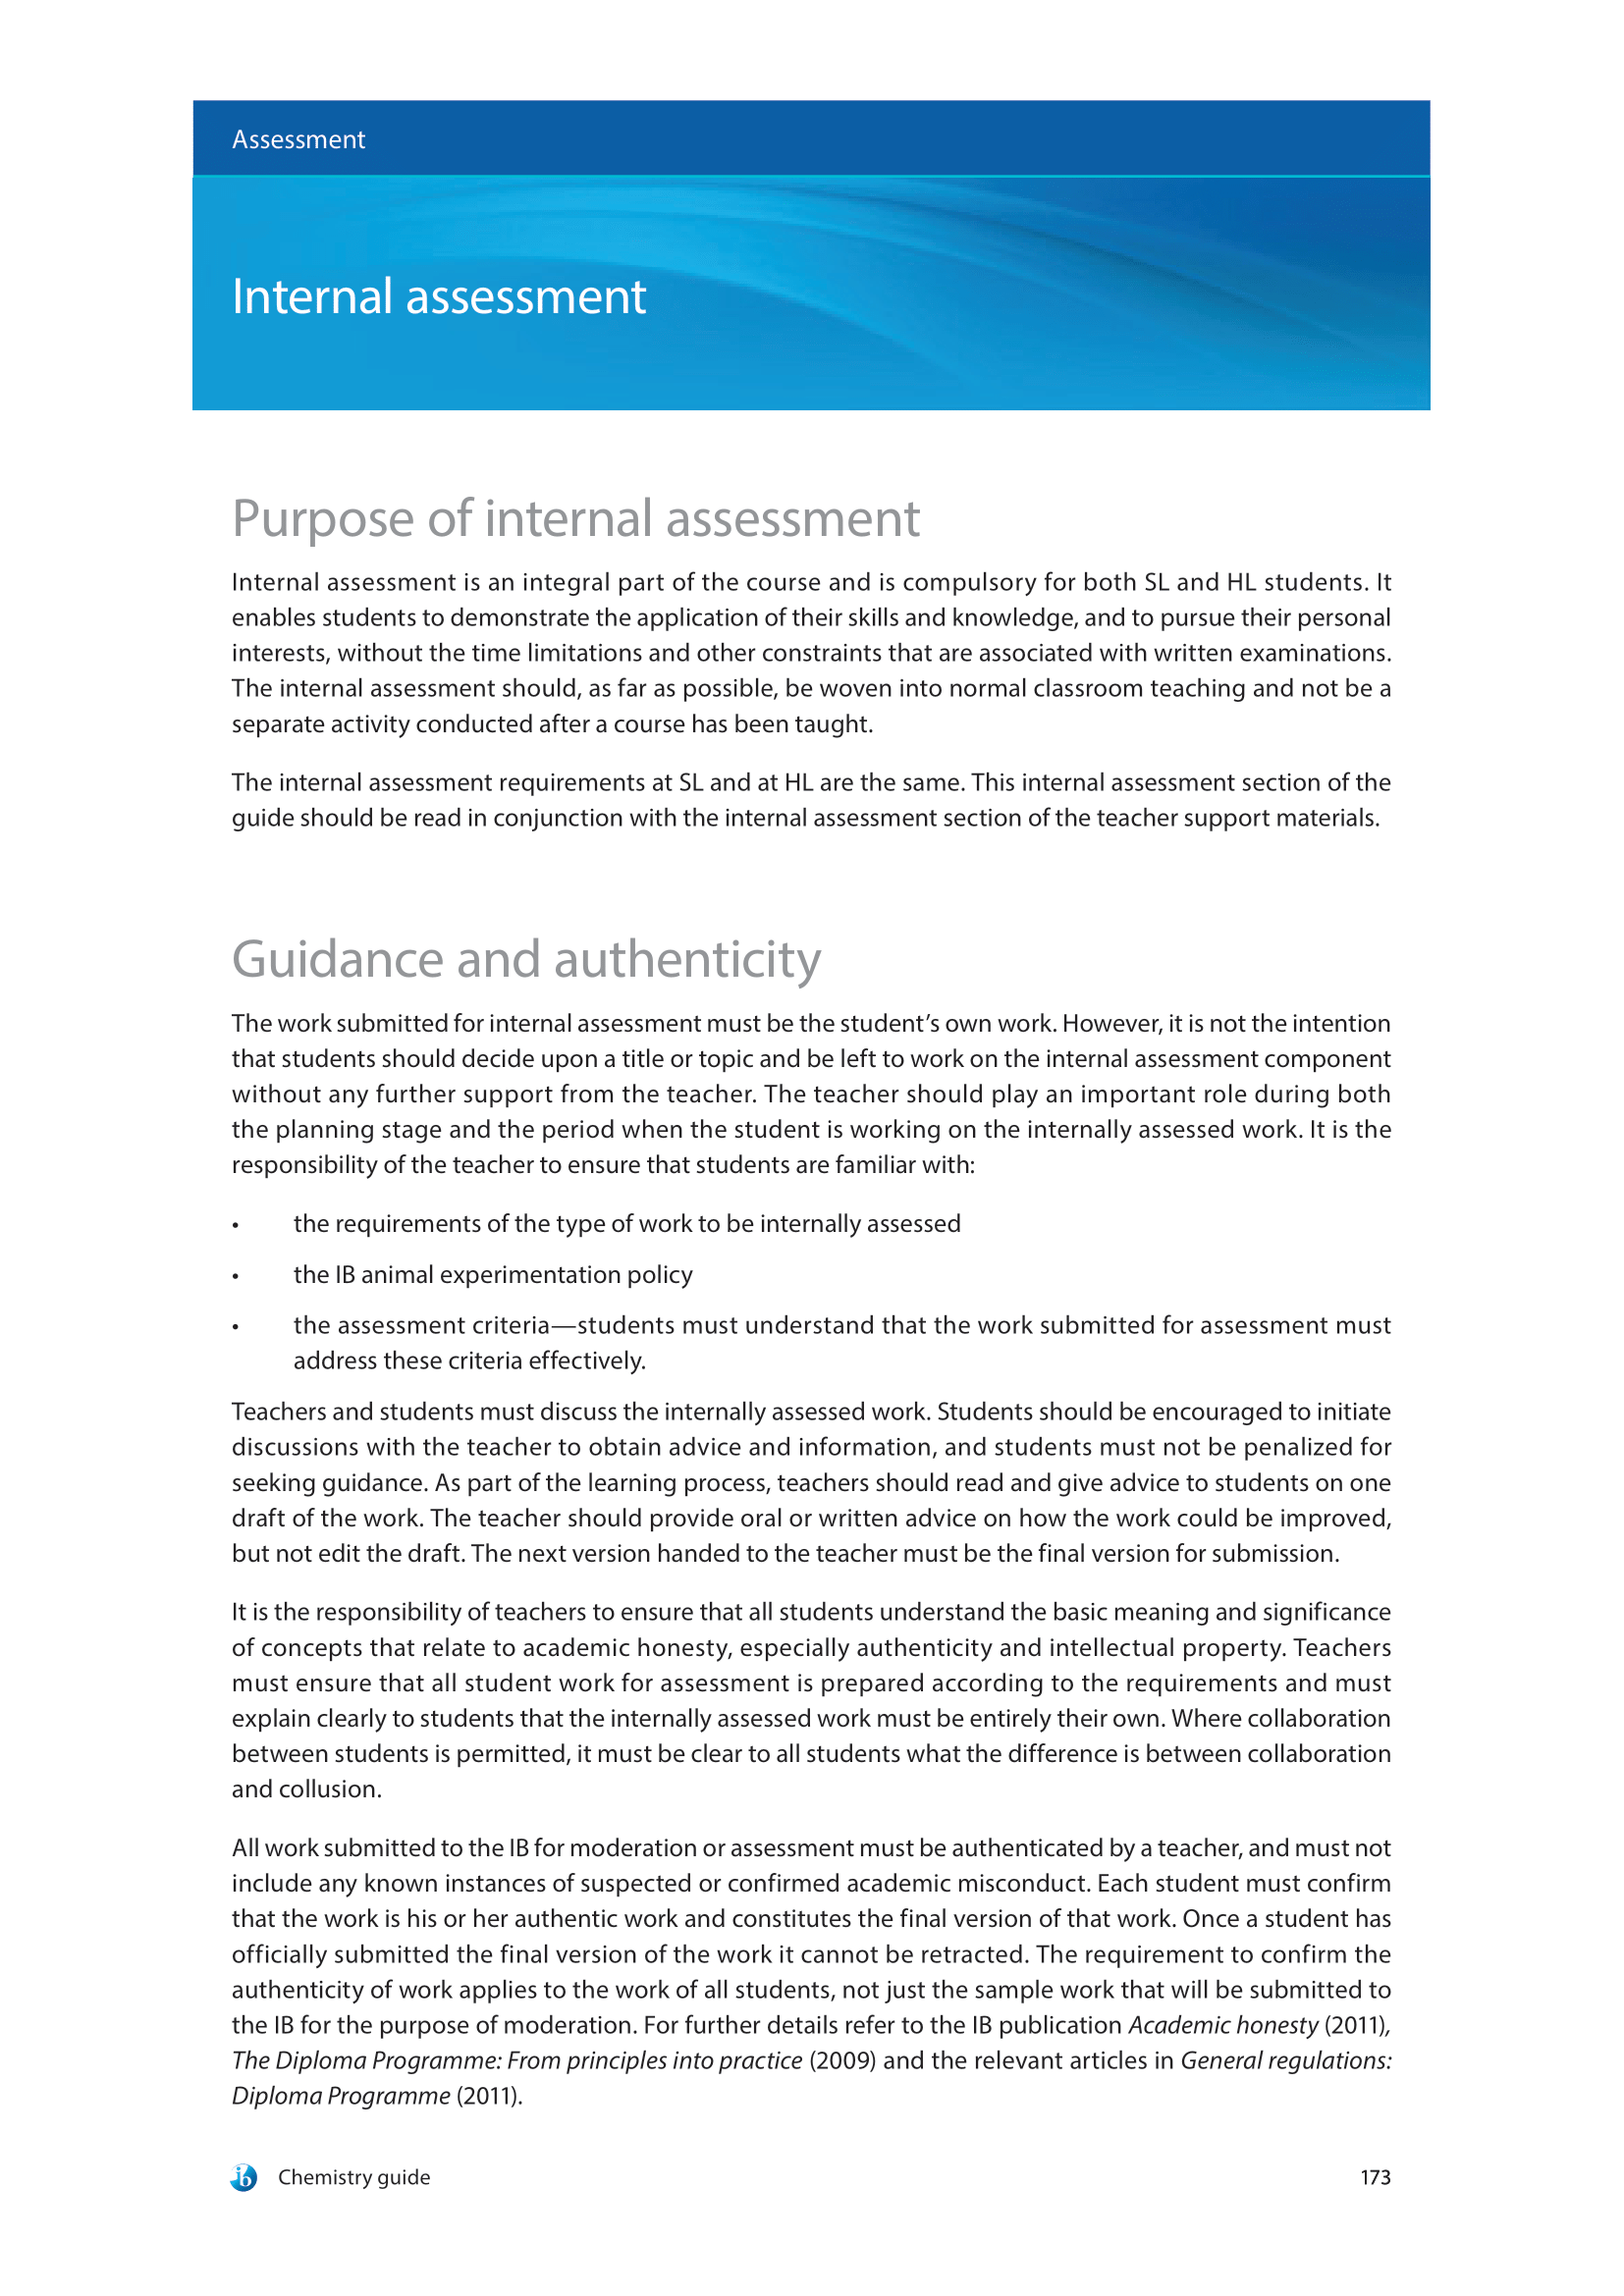 IB DP Chemistry Internal Assessment Overview